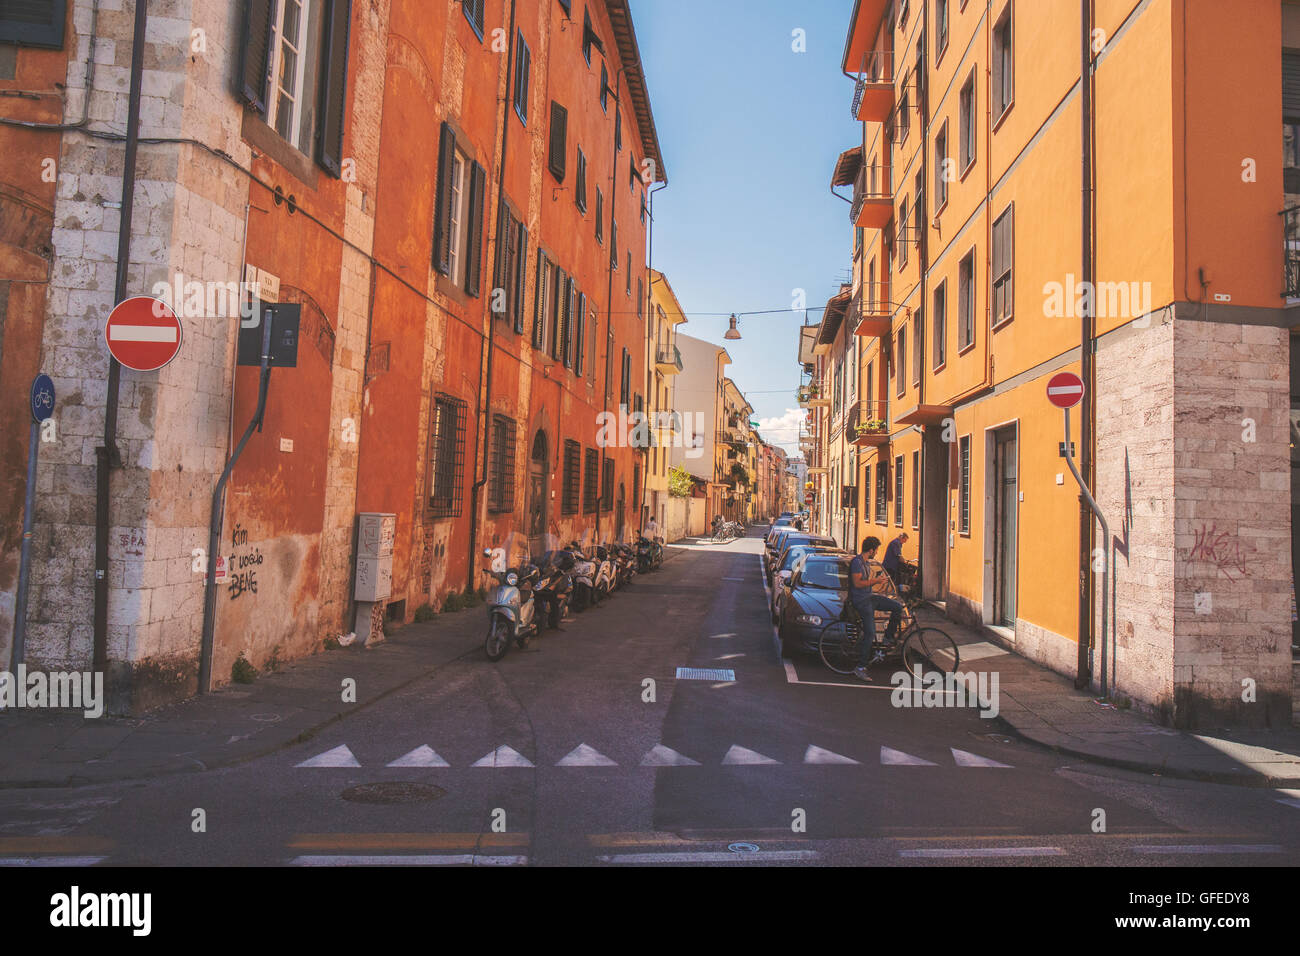 Una colorida calle Italiano en Pisa, Italia Central Foto de stock